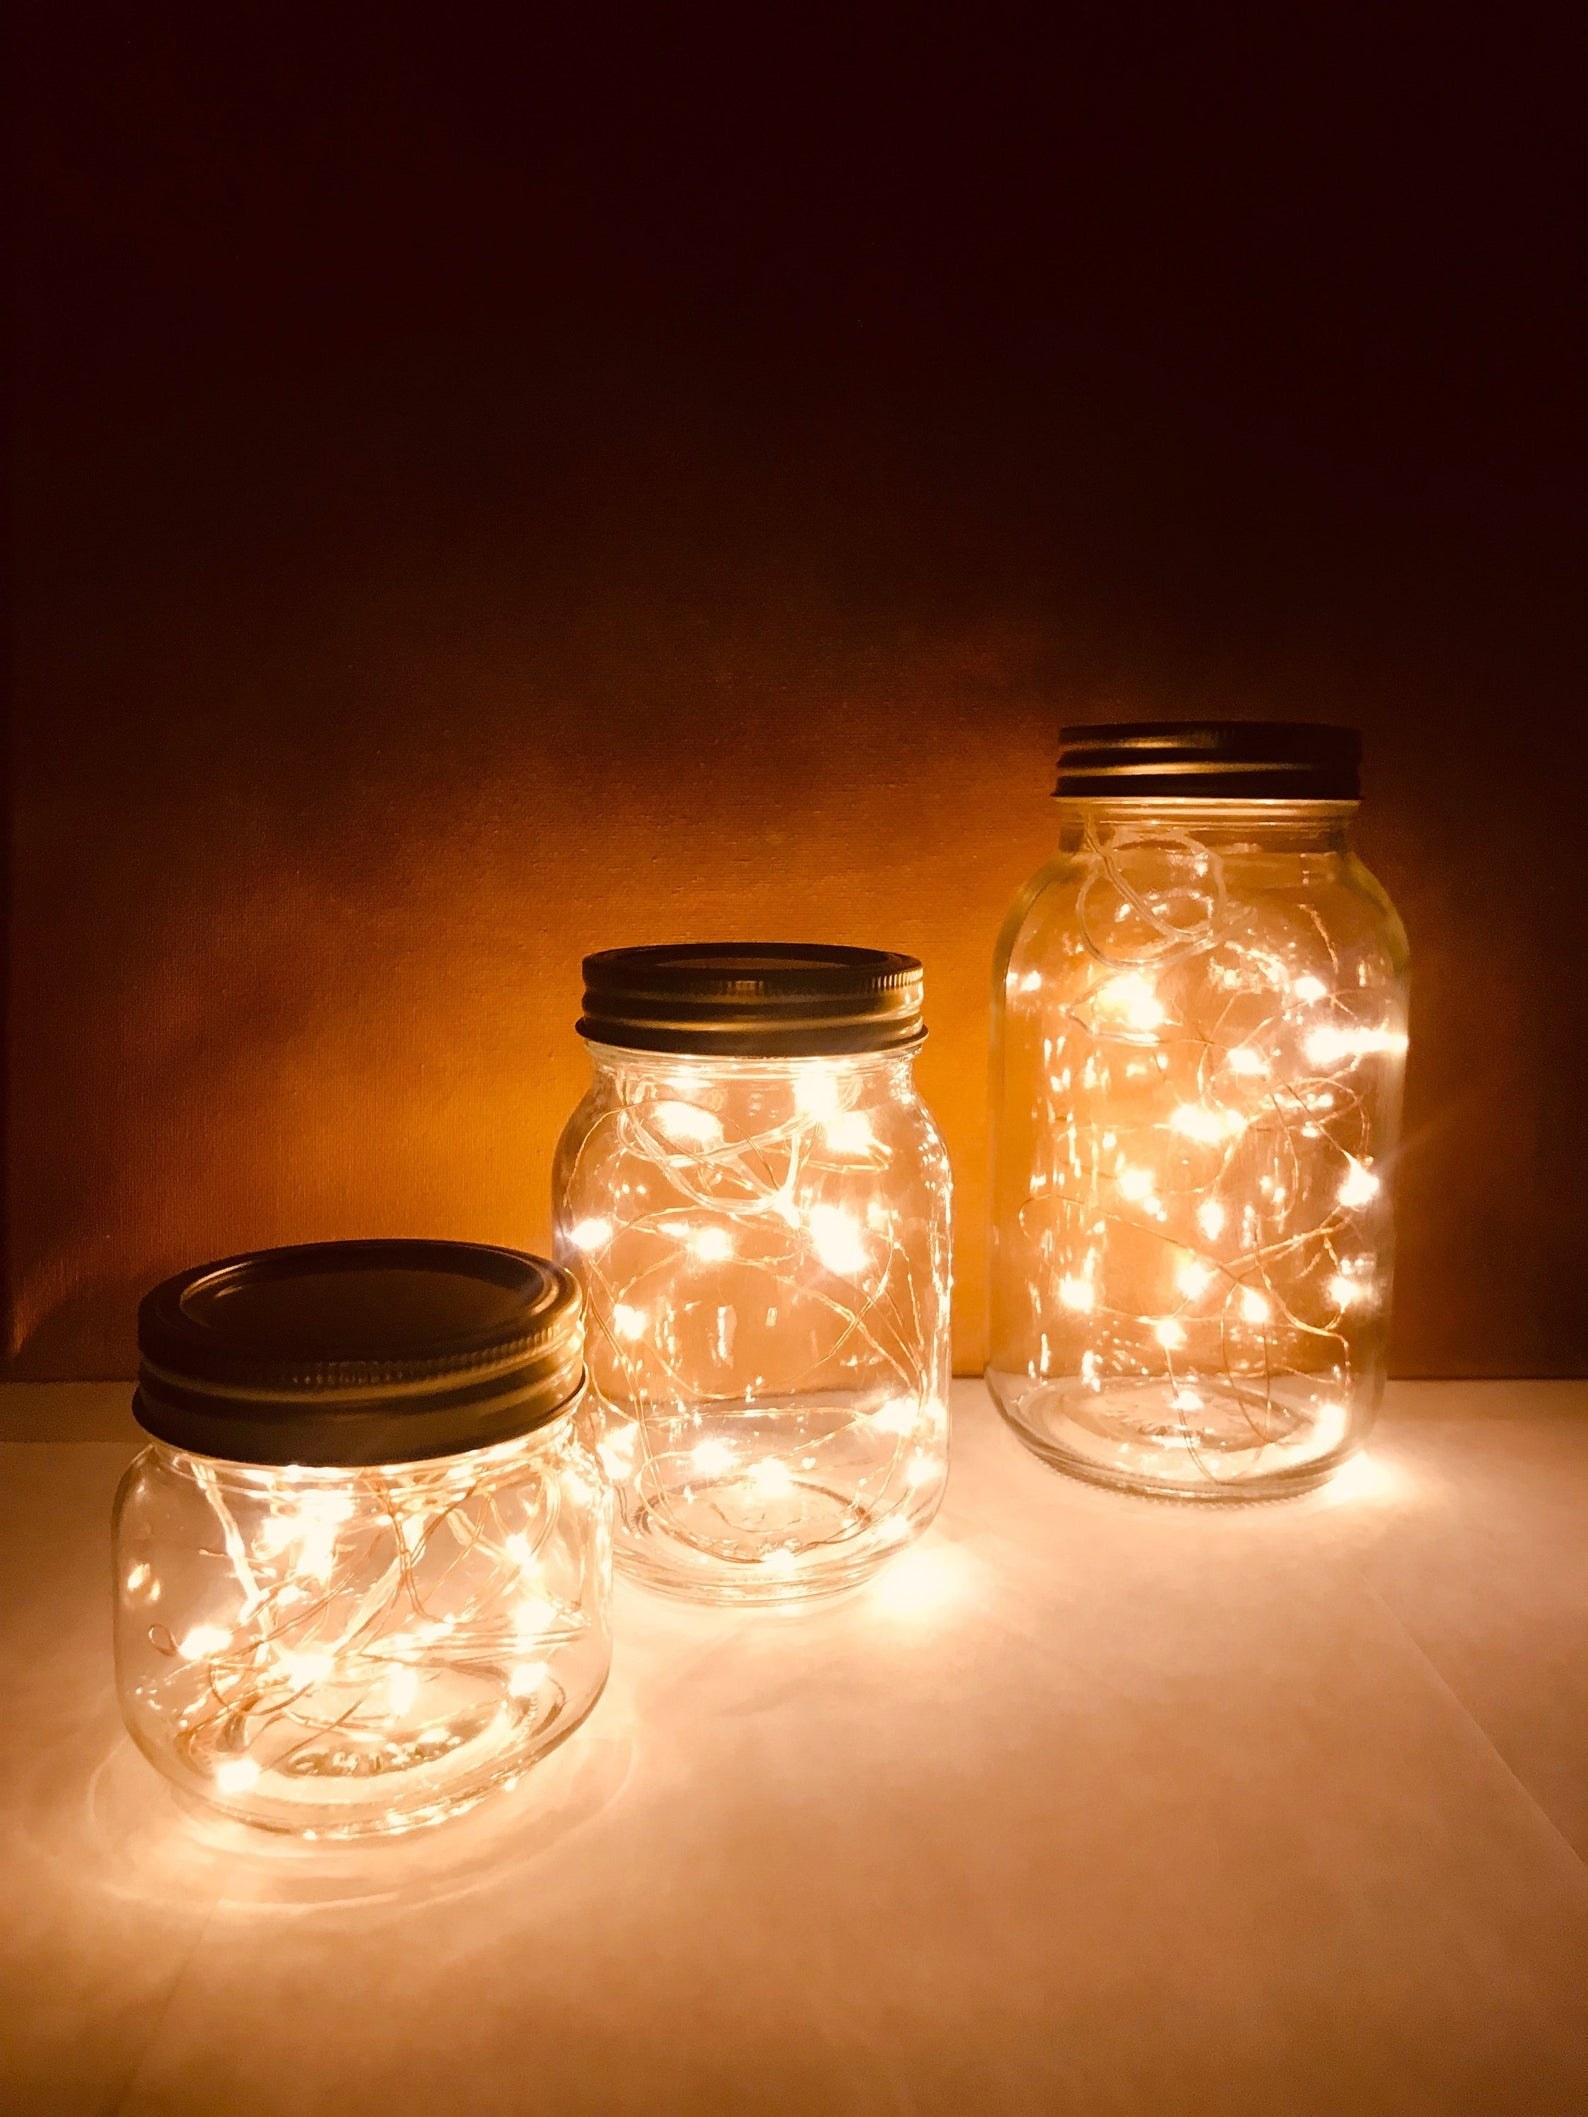 the three jars of lights